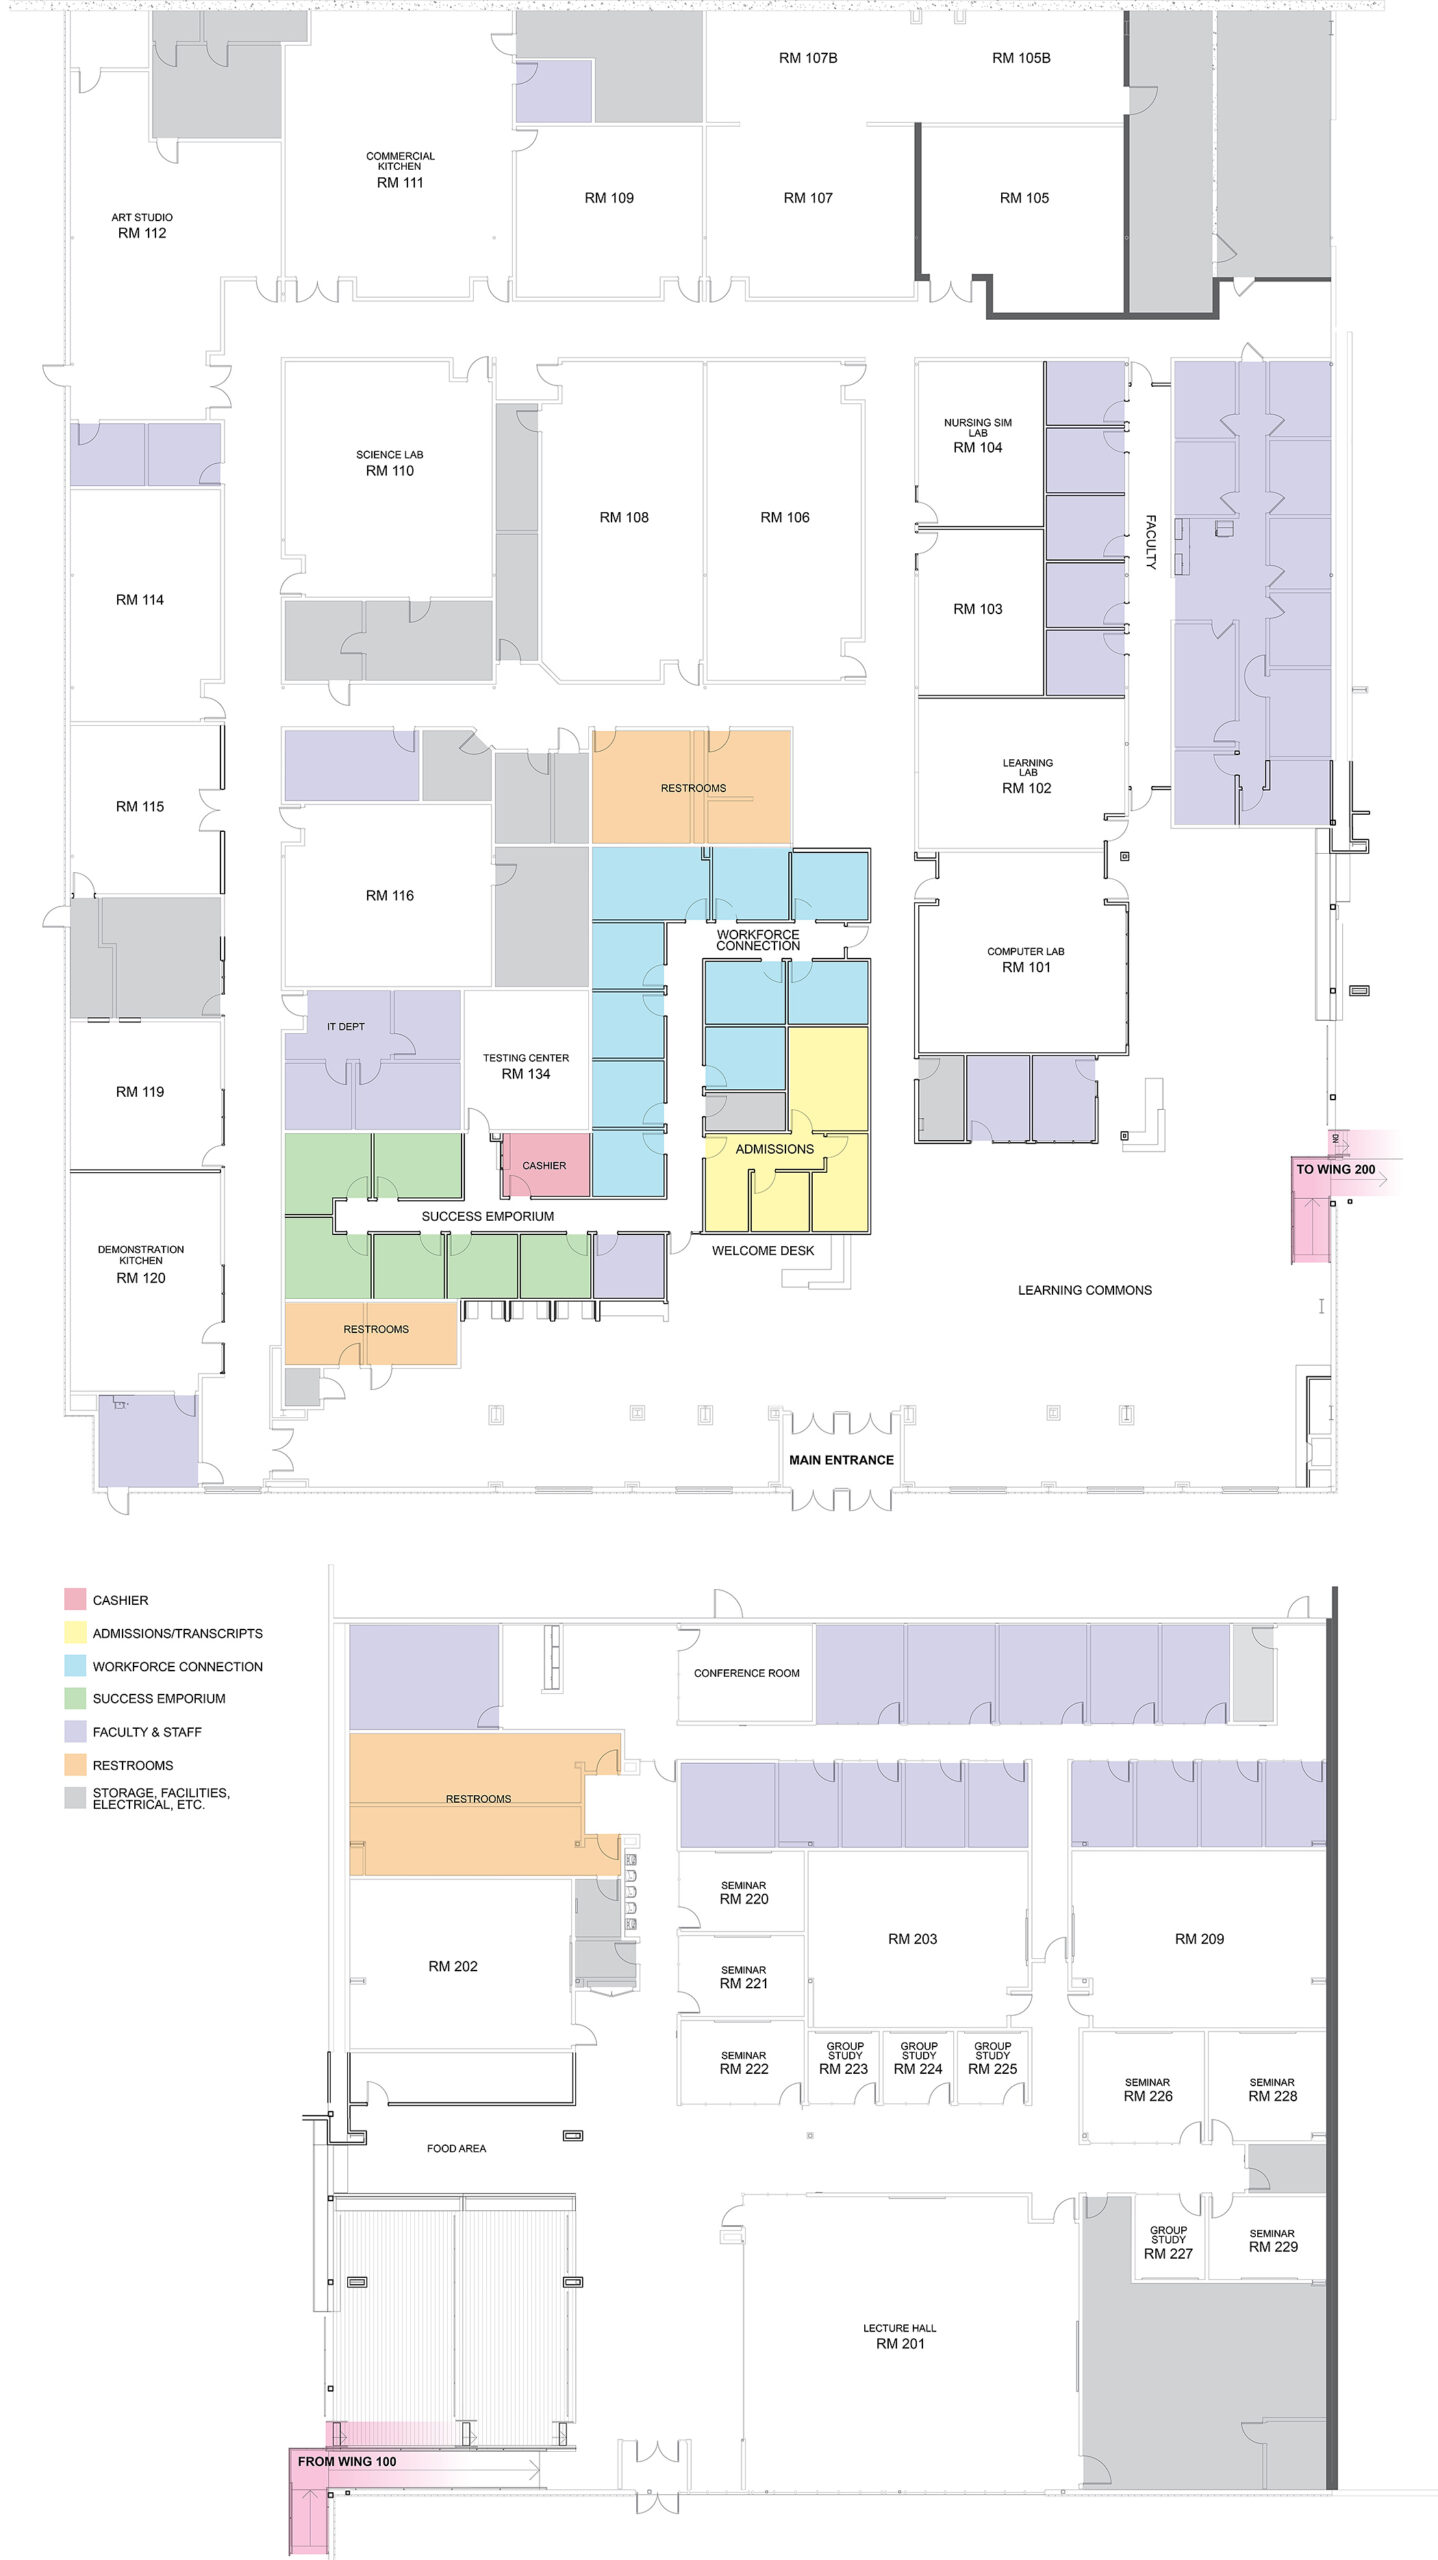 ENMU-Ruidoso floor plan July 2021